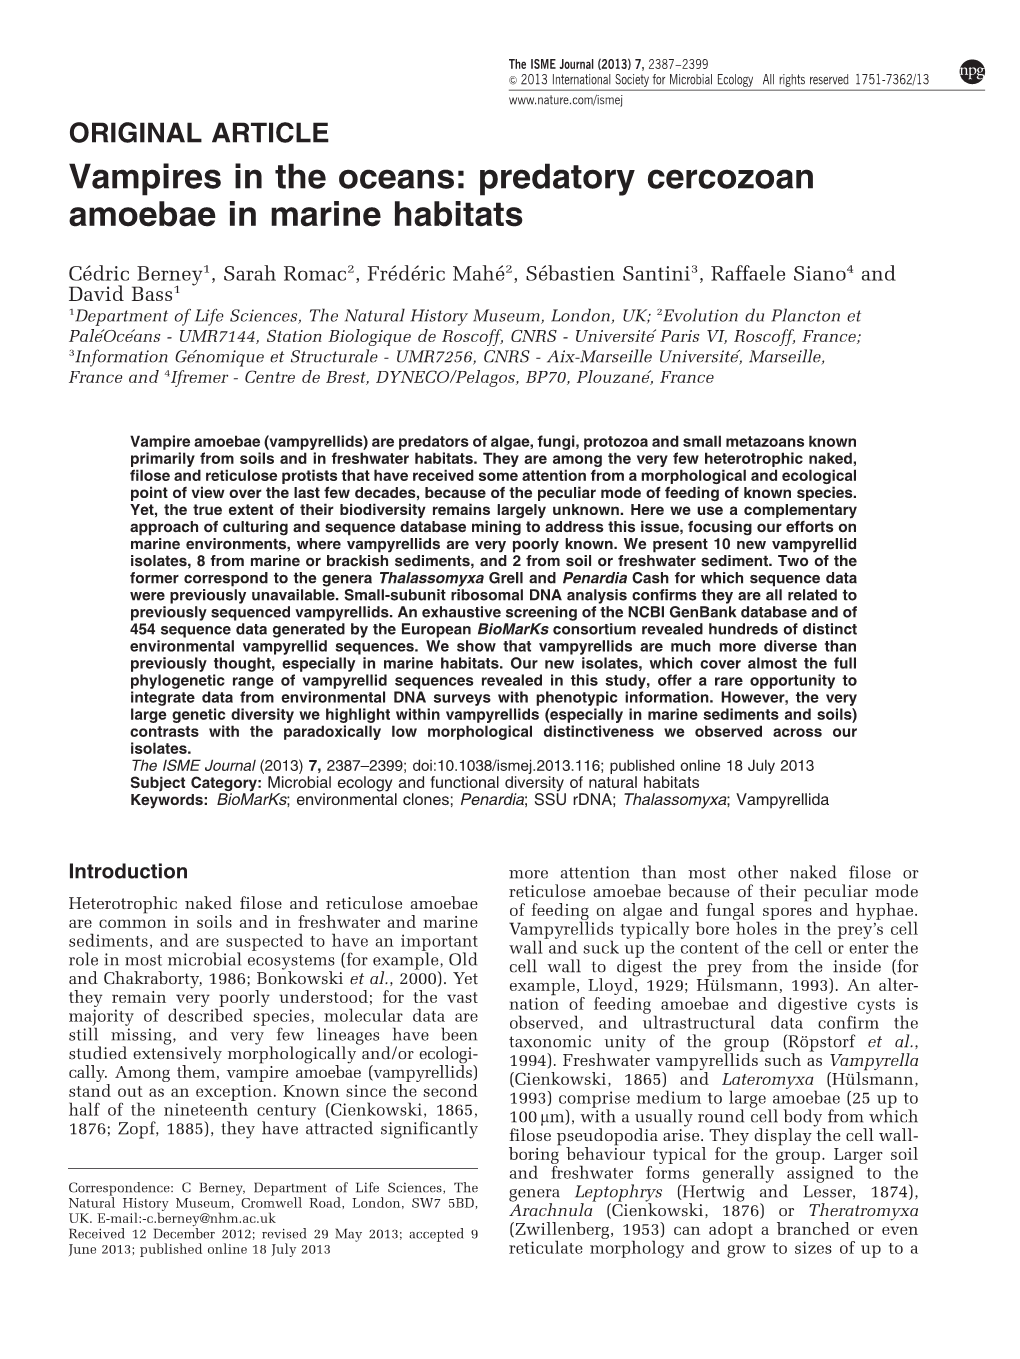 Predatory Cercozoan Amoebae in Marine Habitats